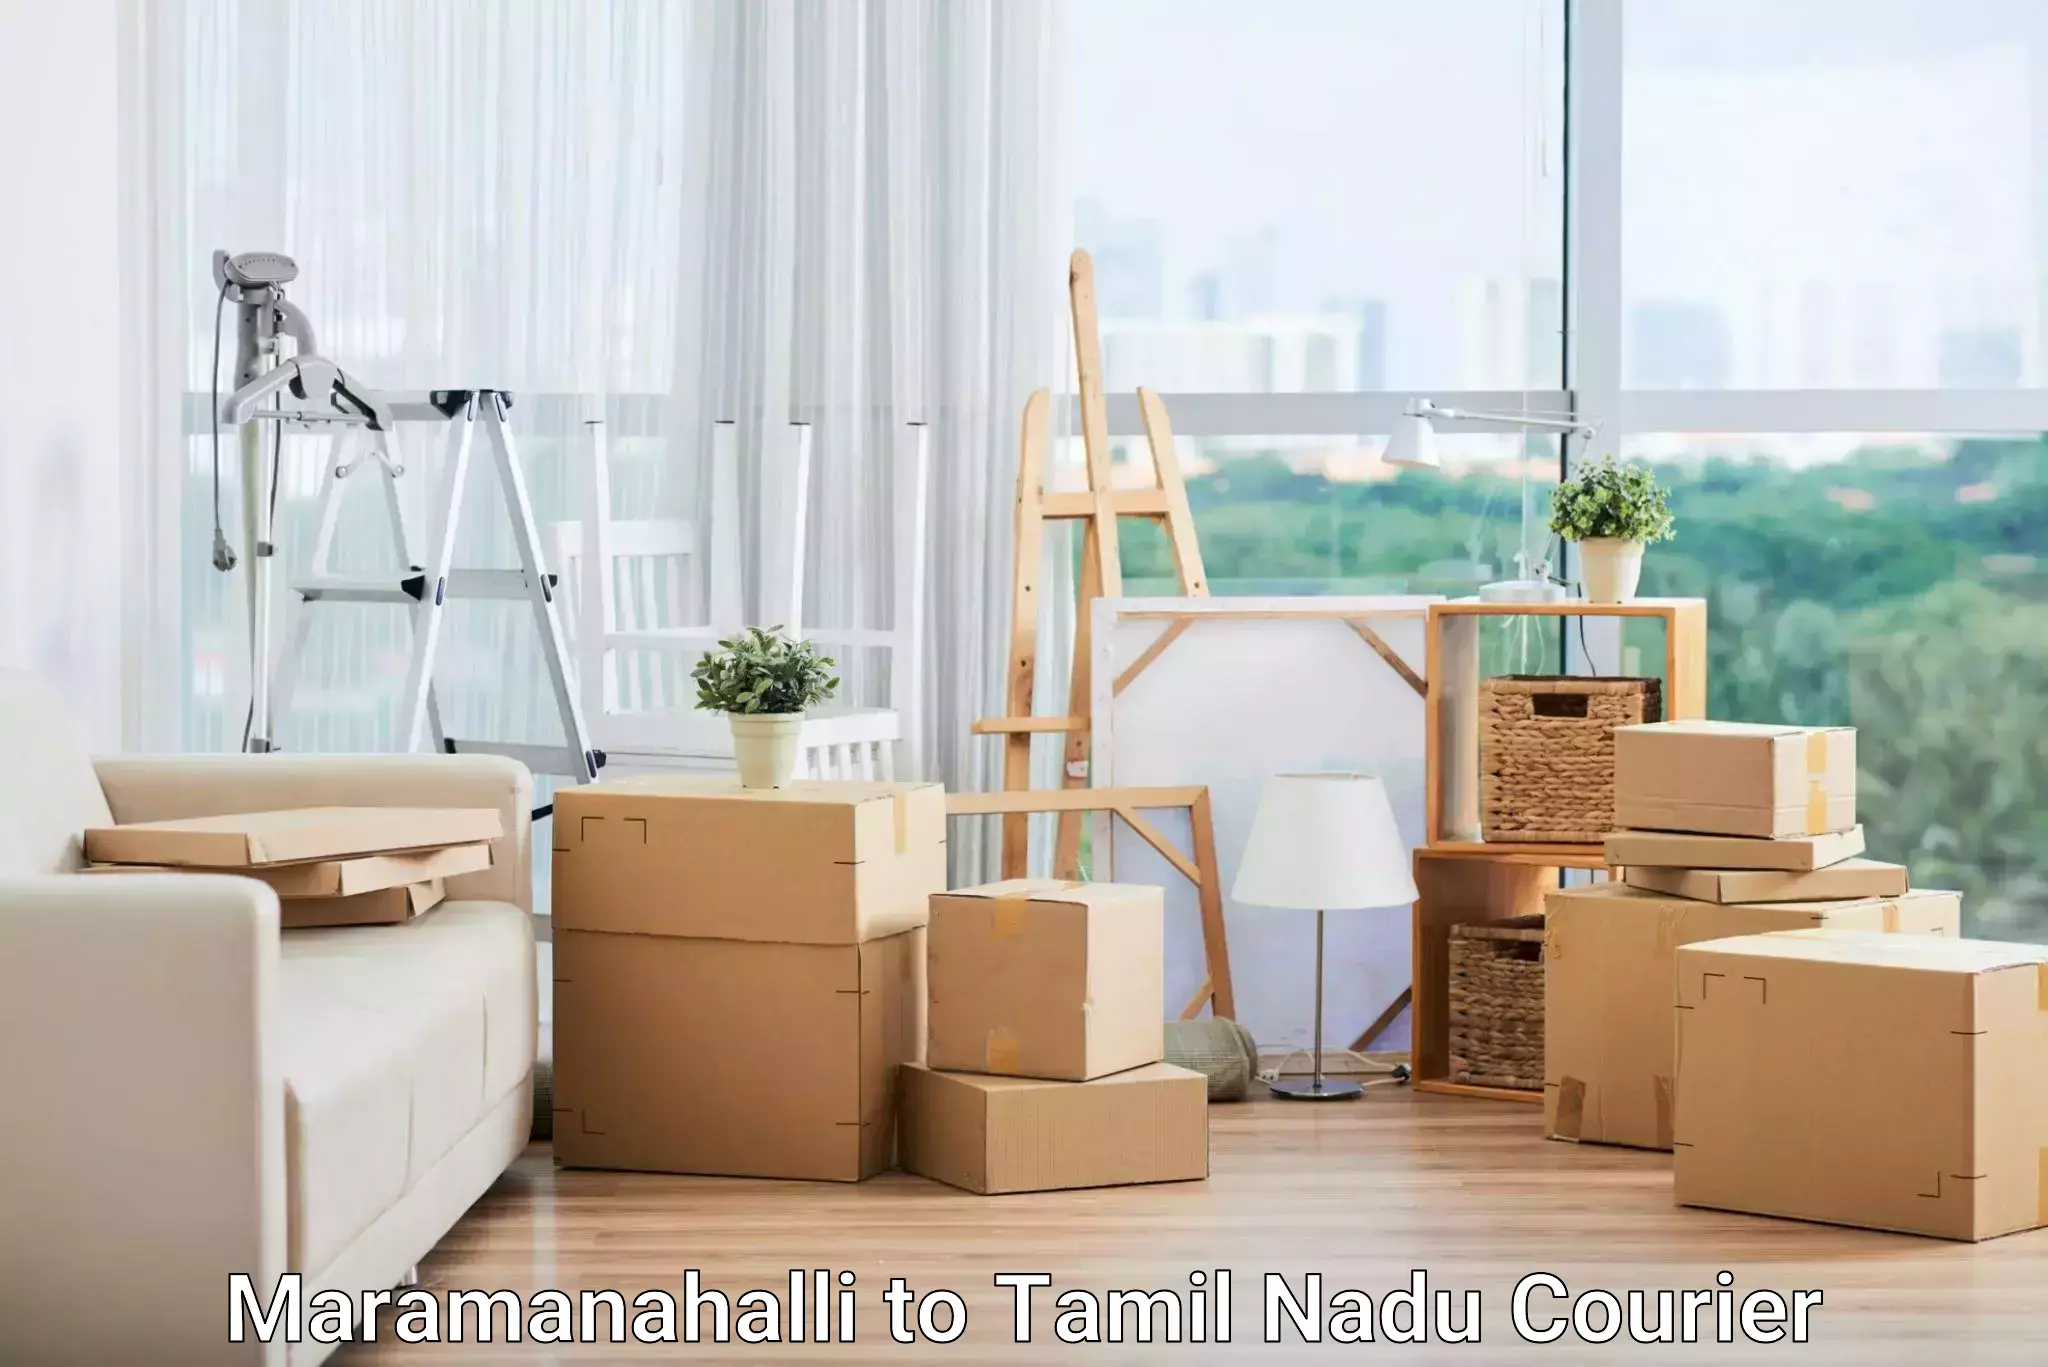 Reliable courier service Maramanahalli to Tirukalukundram